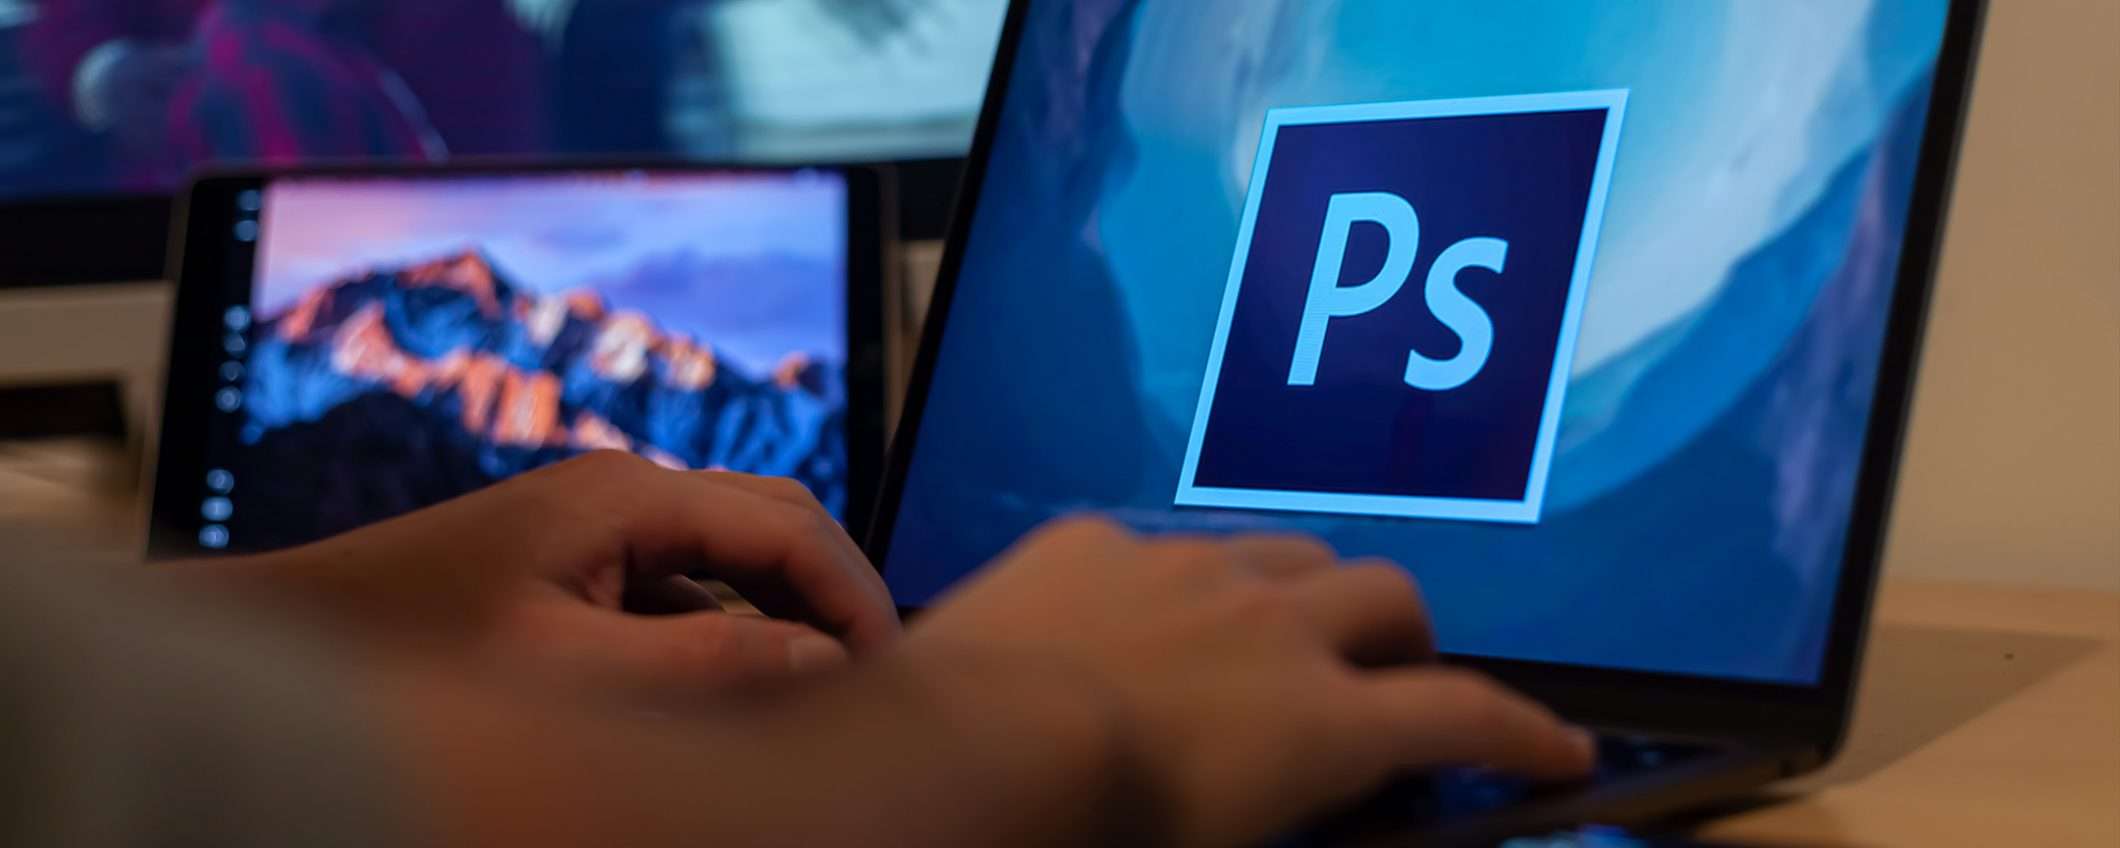 Introduzione ad Adobe Photoshop: guida per principianti